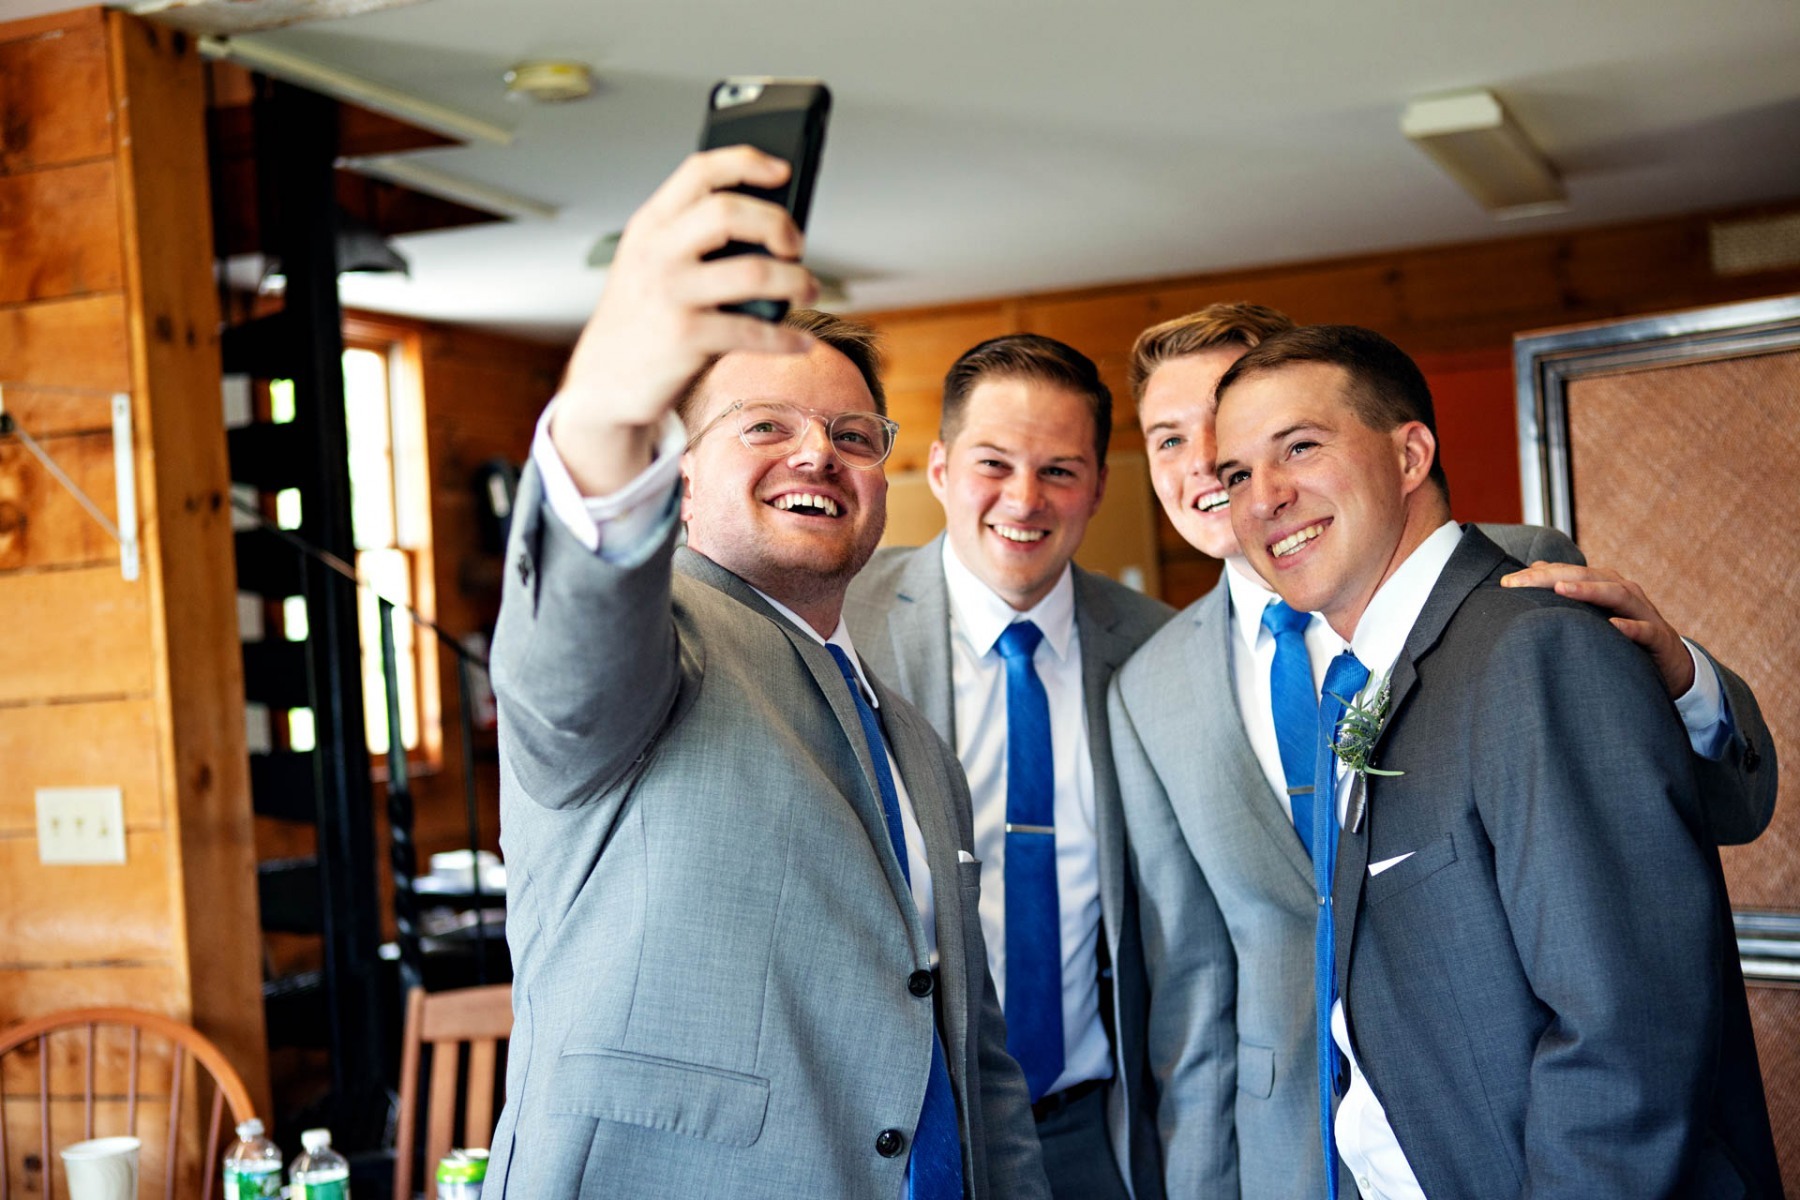 vermont-farm-wedding-groomsmen-selfie